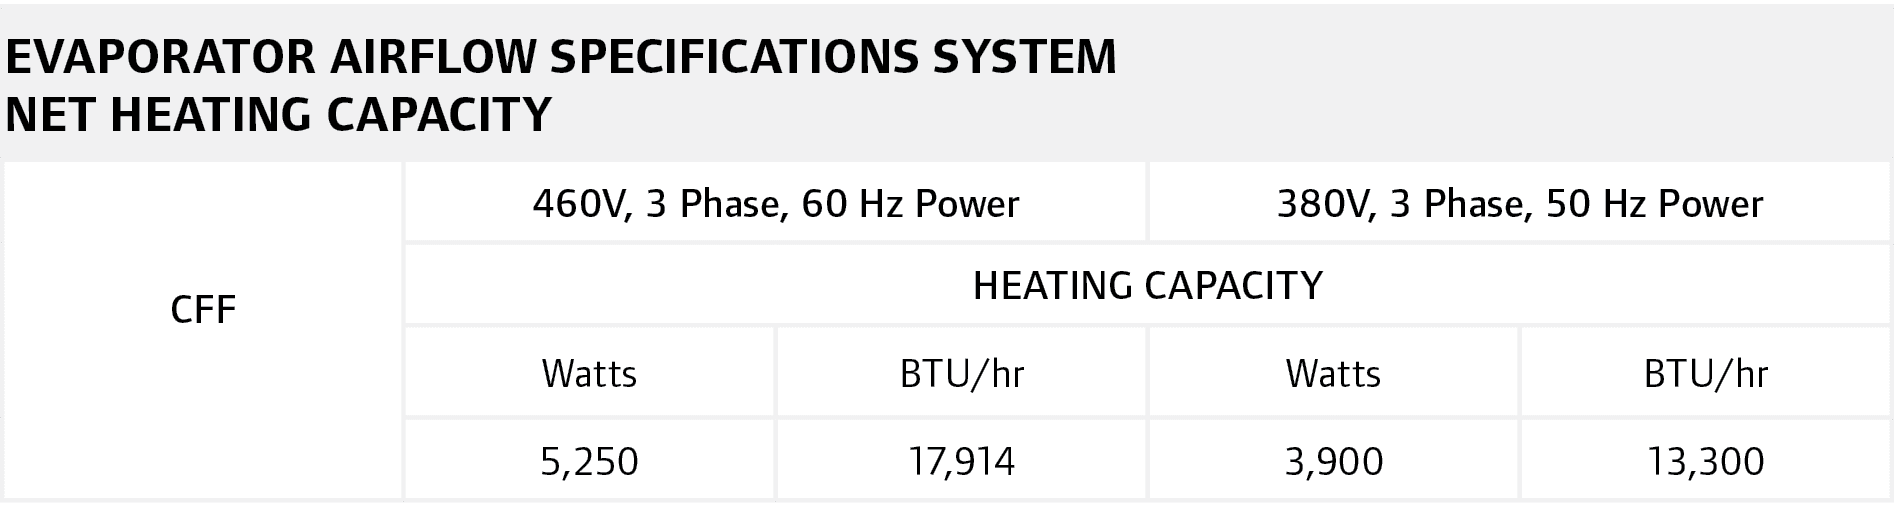 Evaporator Airflow Specifications System Net Heating Capacity,,,,CFF,460V, 3 Phase, 60 Hz Power,380V, 3 Phase, 50 Hz ...